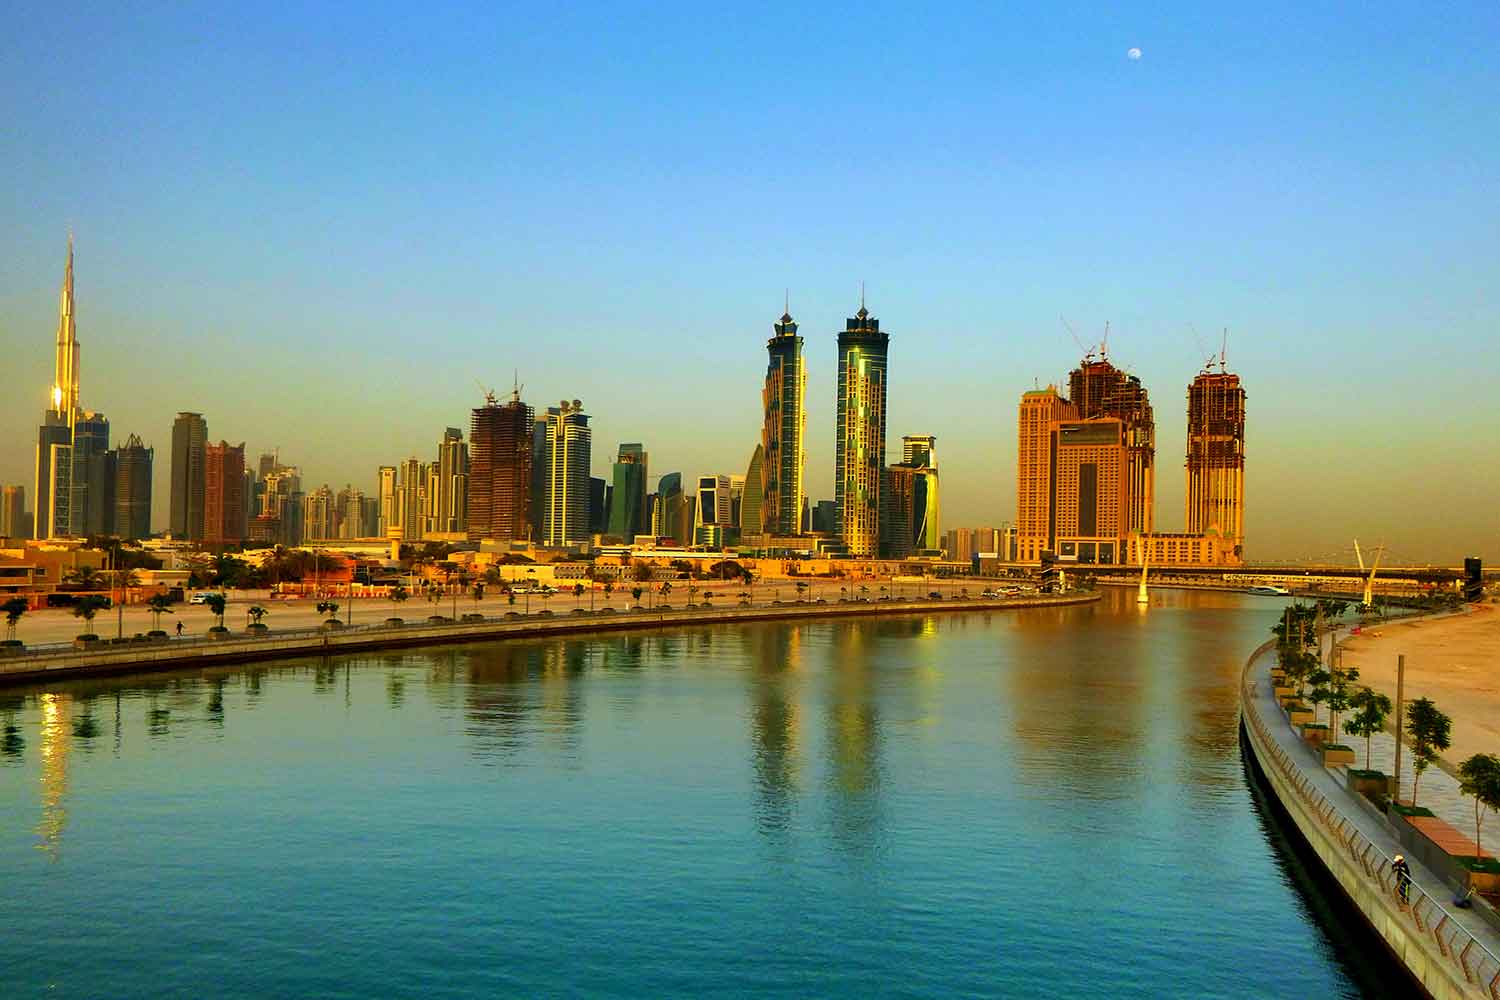 Dubai Water Canal Image